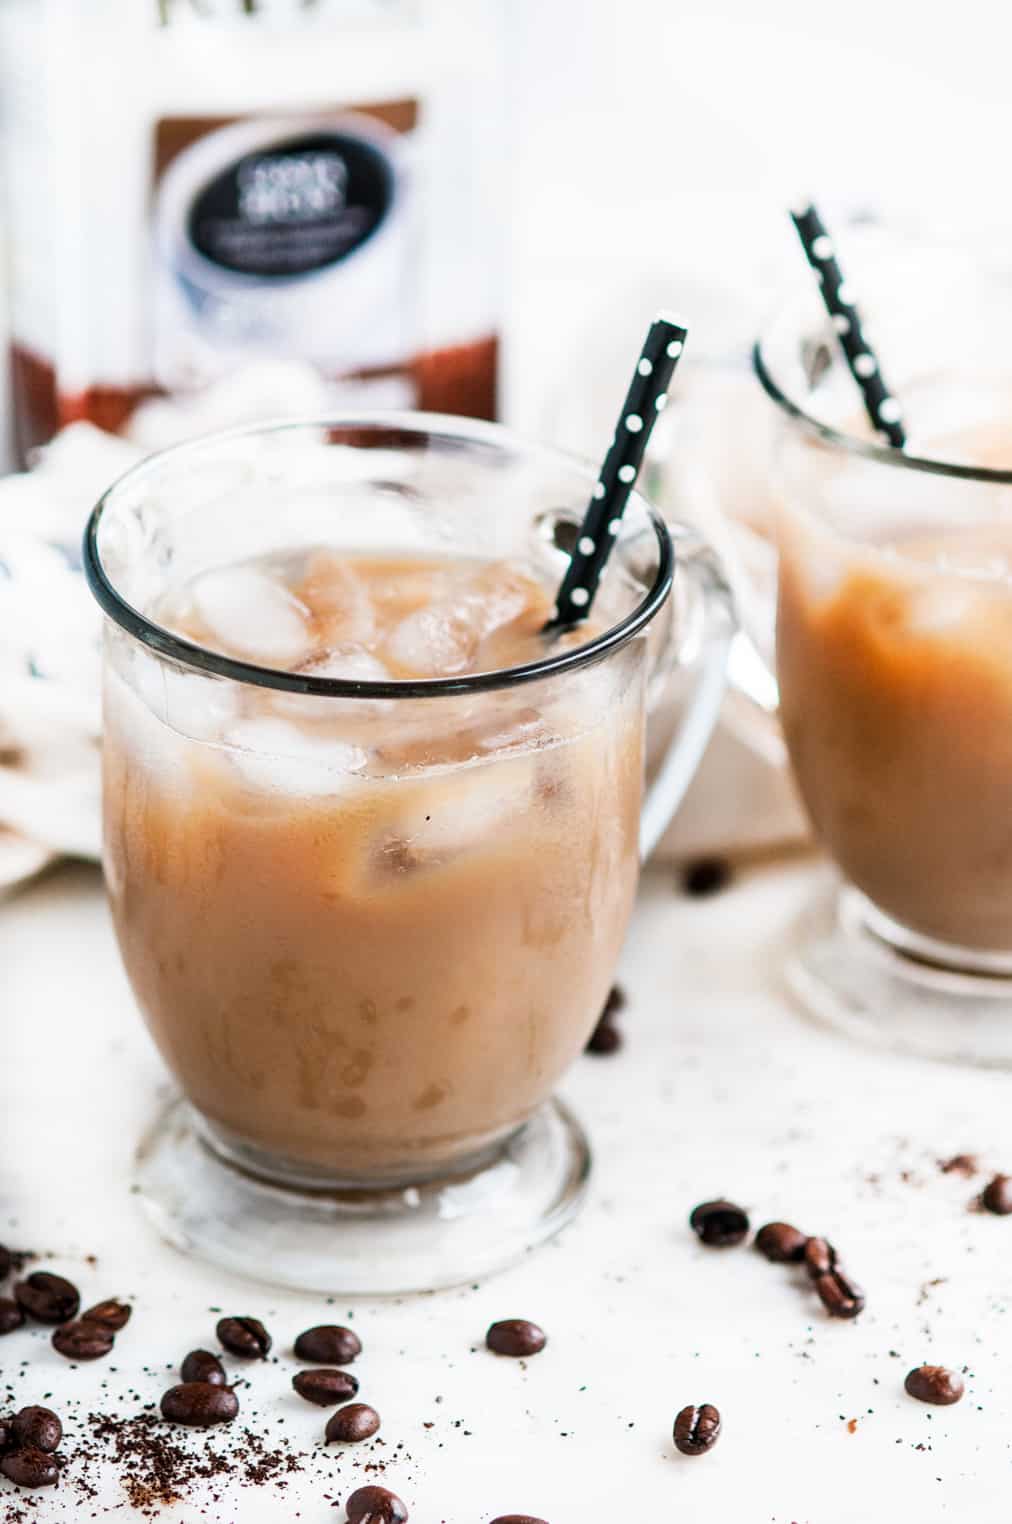 https://www.aberdeenskitchen.com/wp-content/uploads/2017/07/Iced-Vanilla-Latte-with-Homemade-Syrup-3.jpg